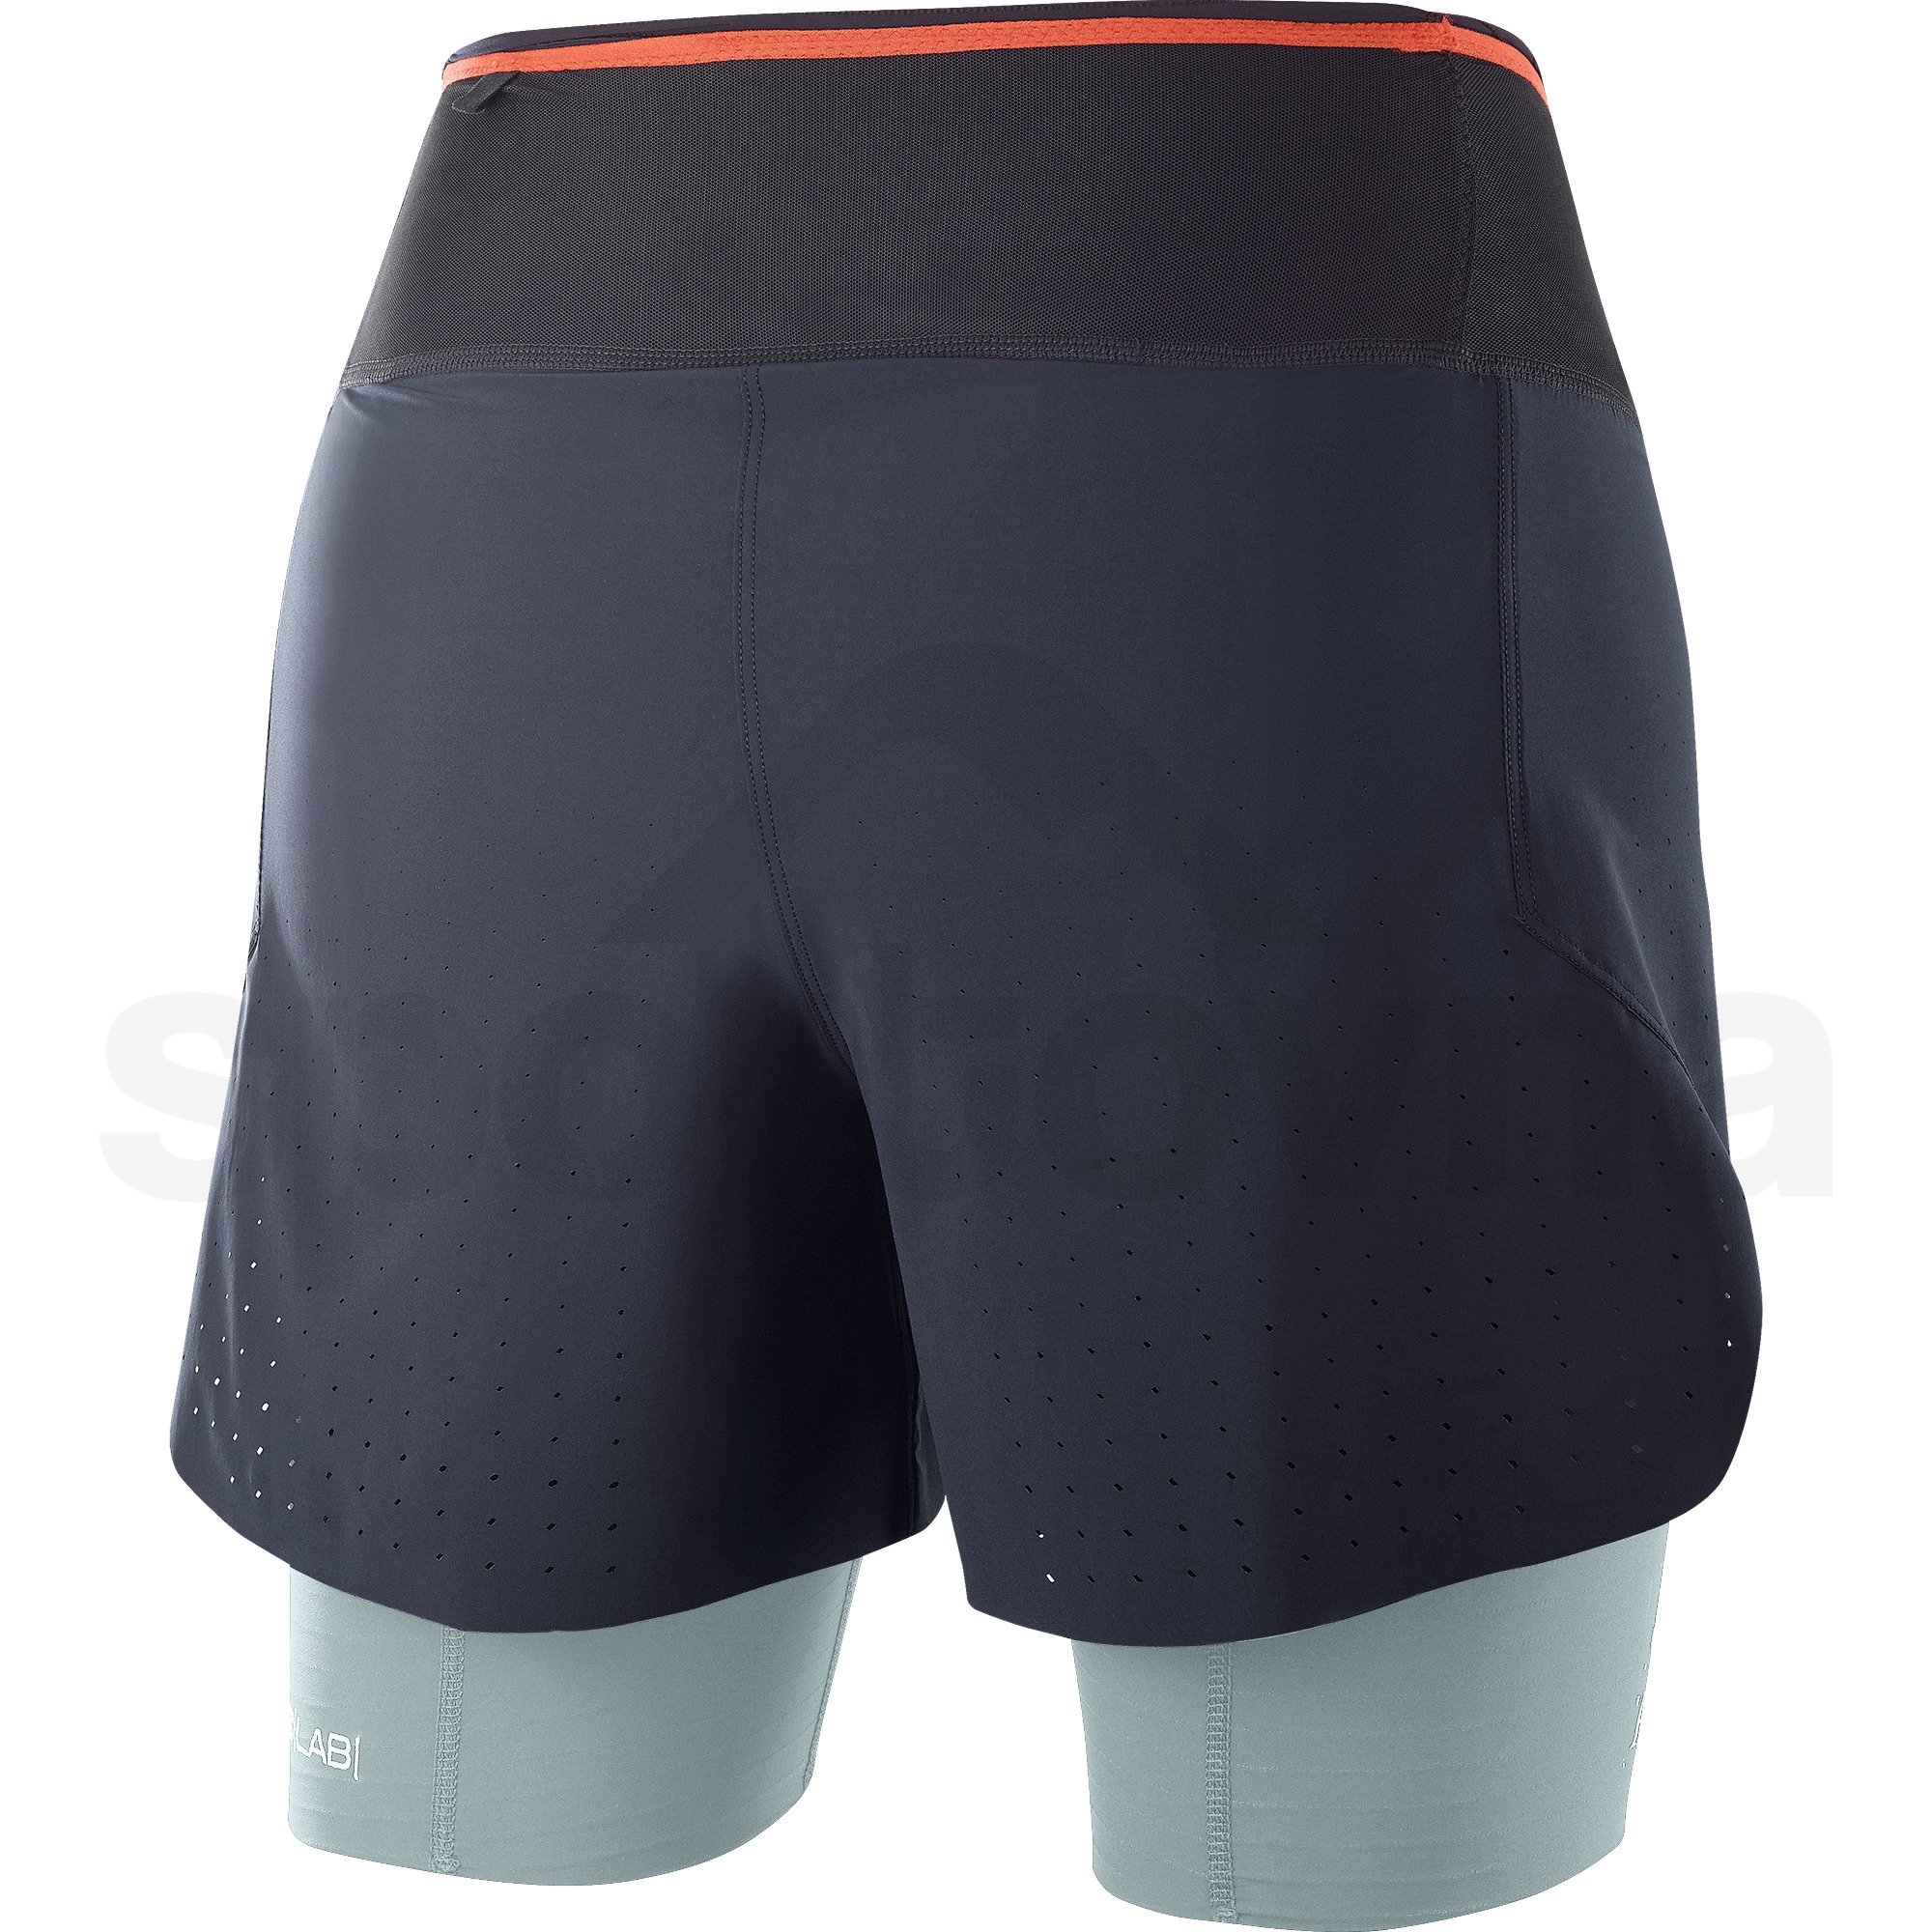 Kraťasy Salomon S/LAB Ultra 2IN1 Shorts W - modrá/modrá